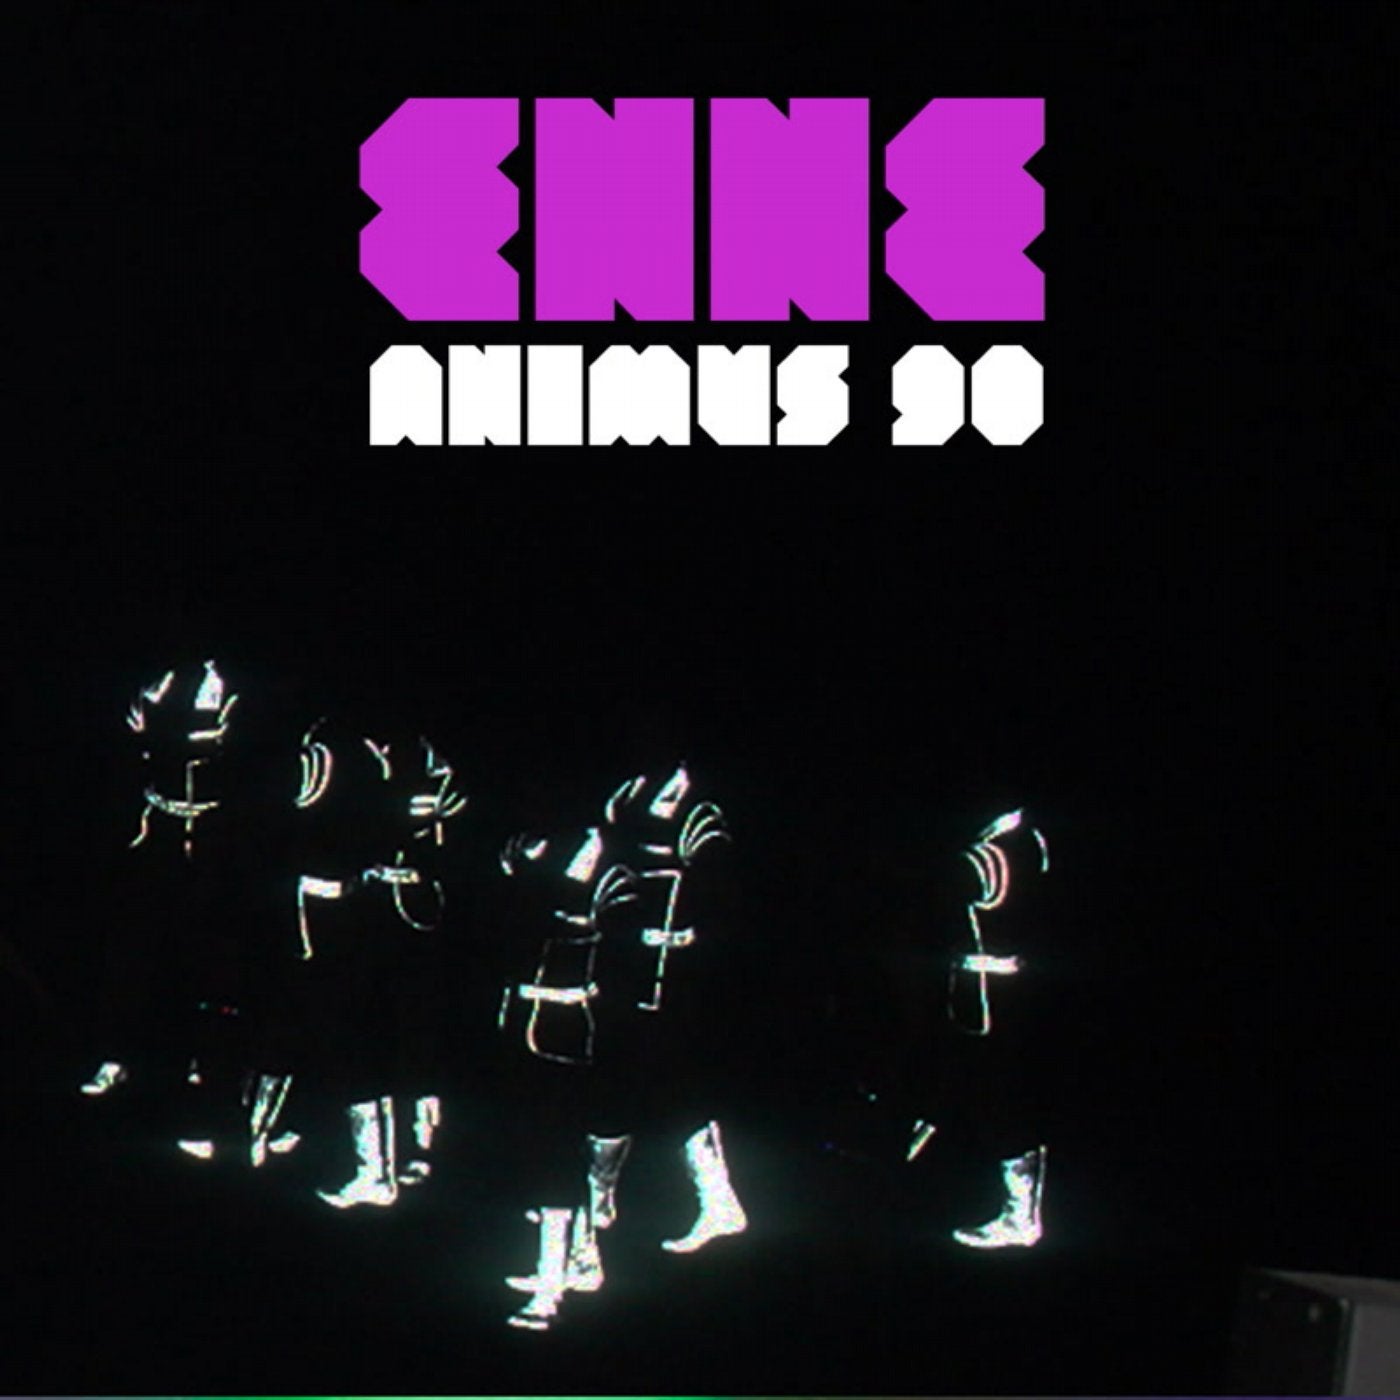 Animus 90